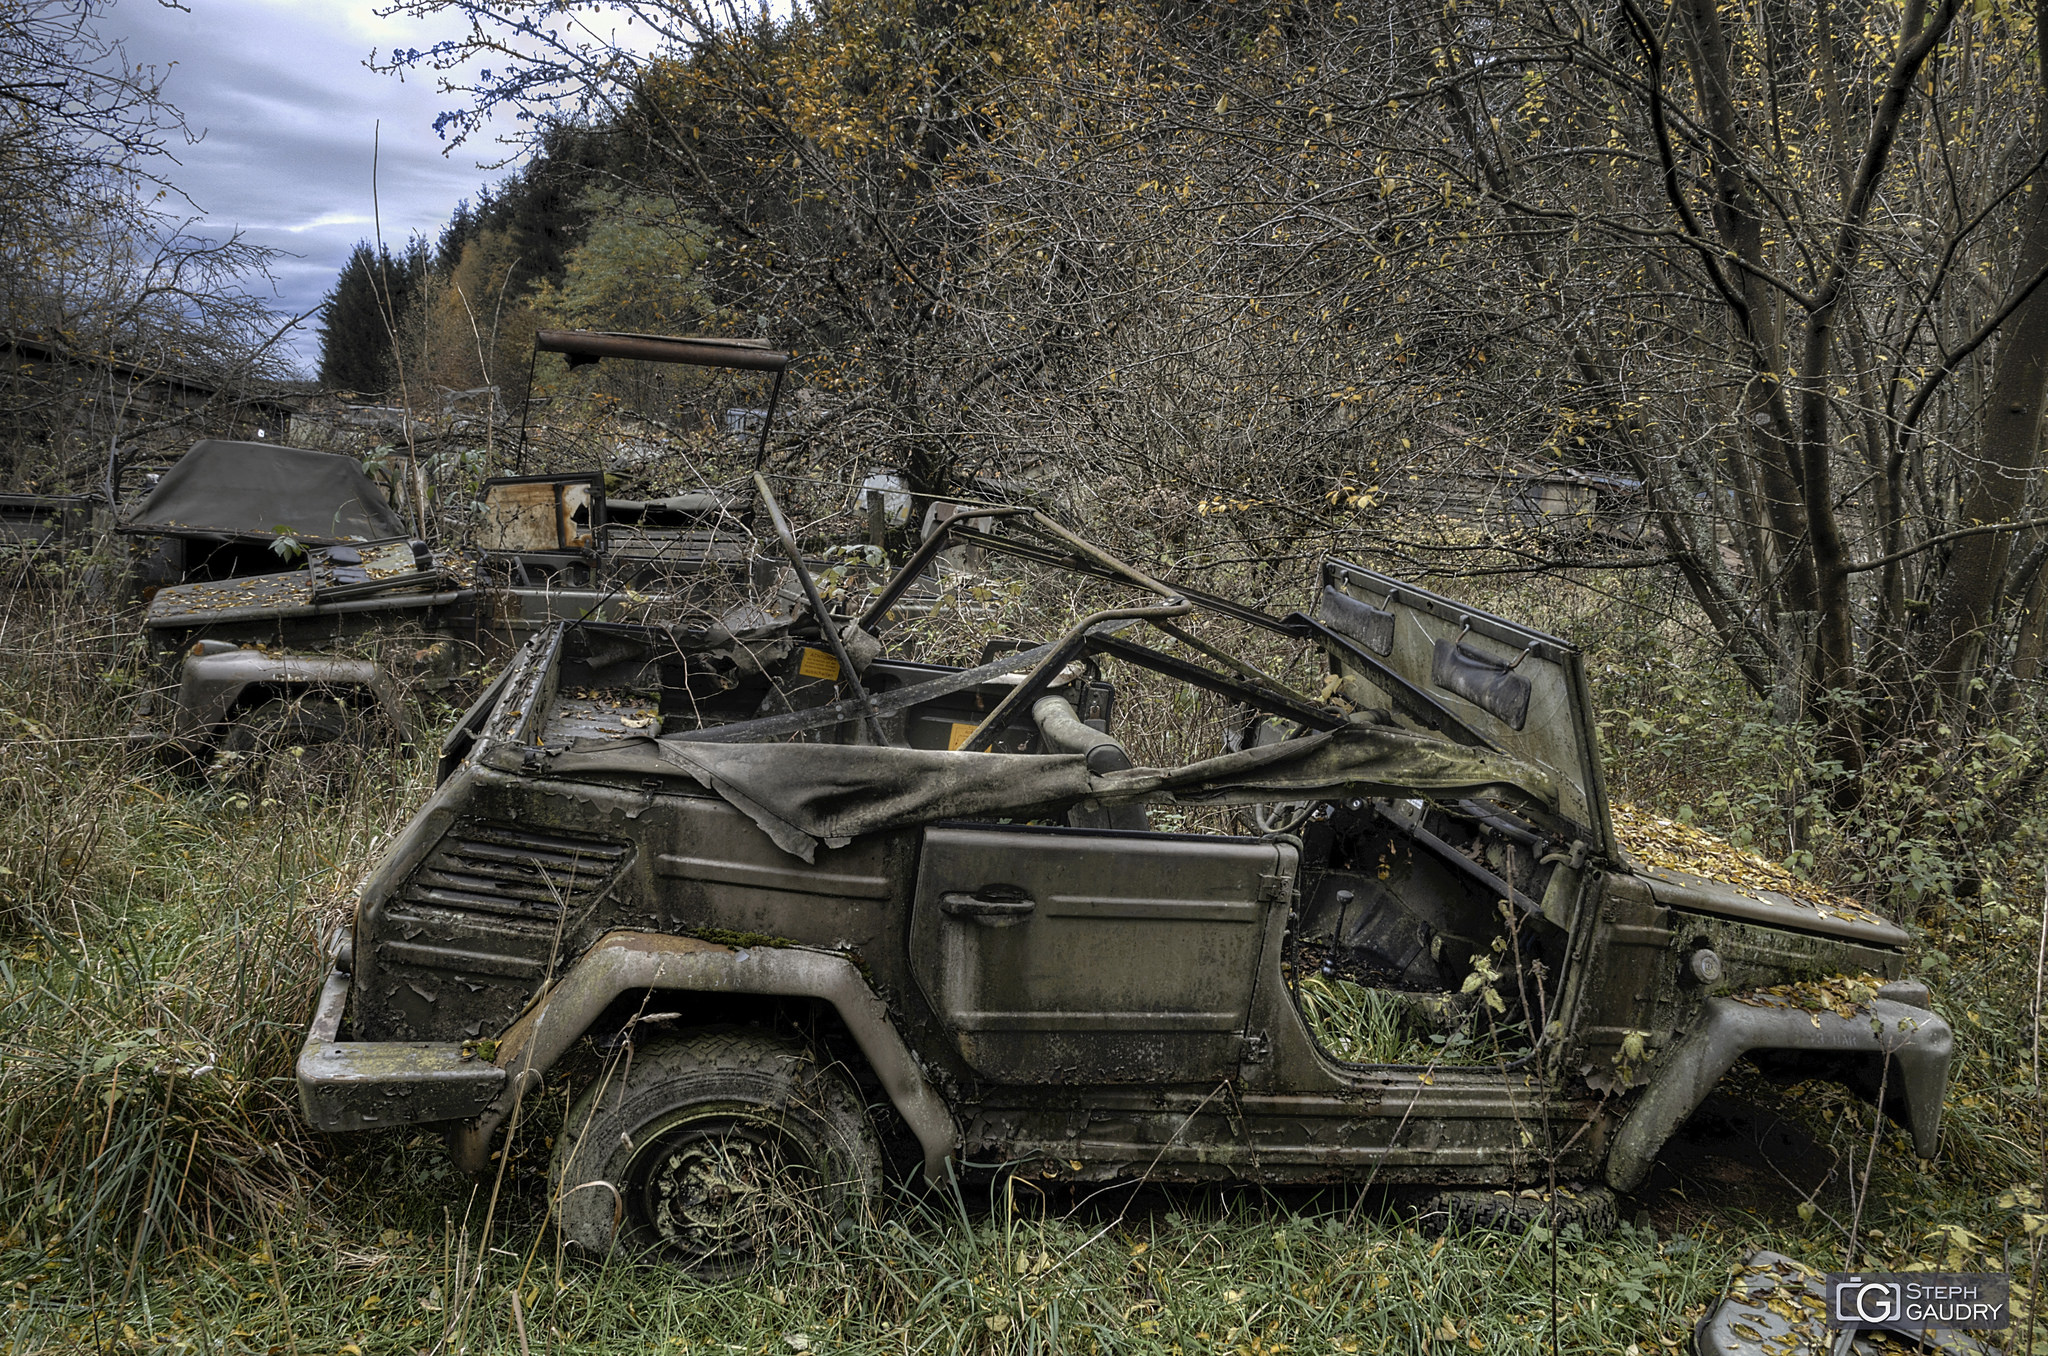 Jeeps graveyard [Klik om de diavoorstelling te starten]